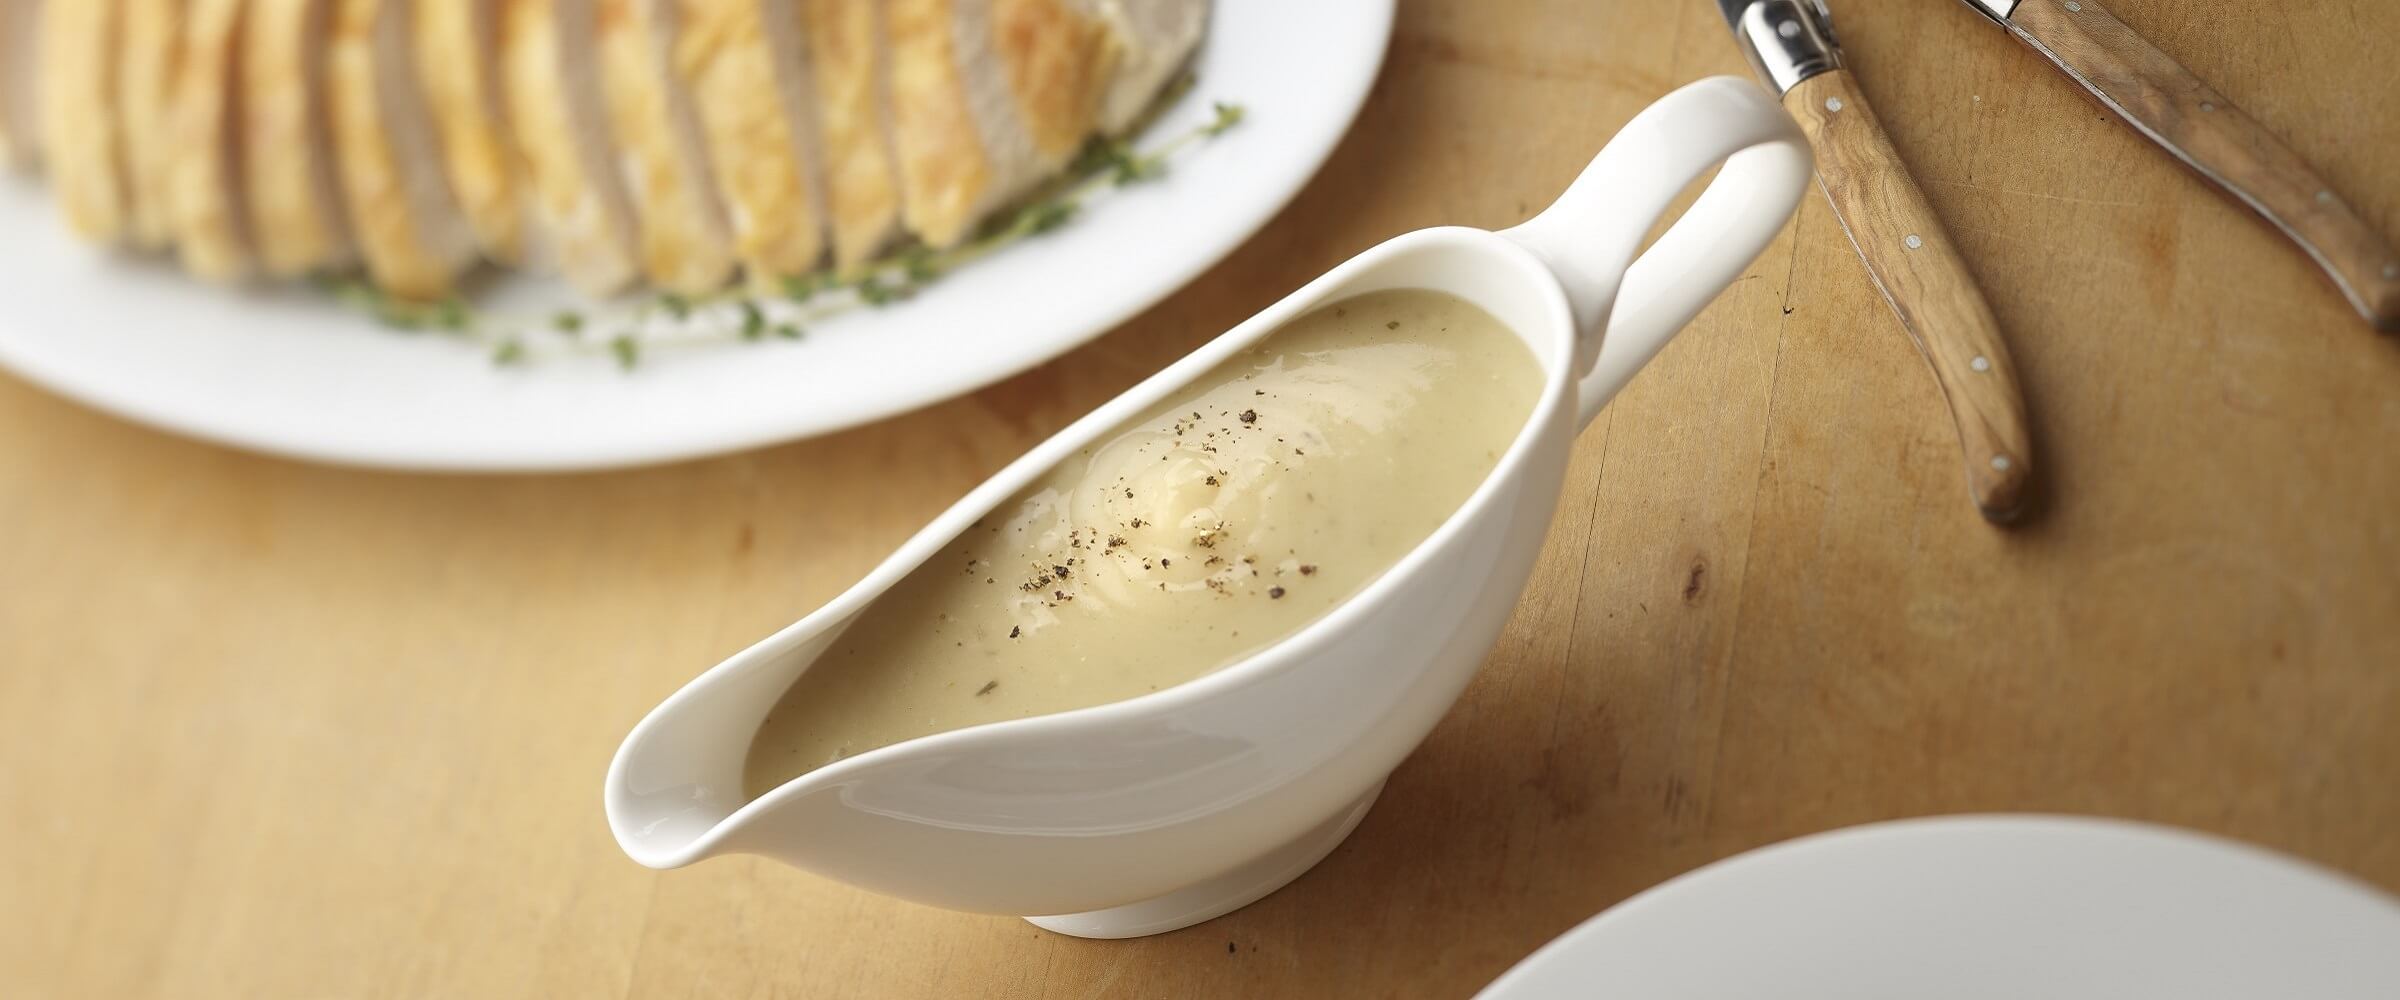 Herb gravy in white serving bowl